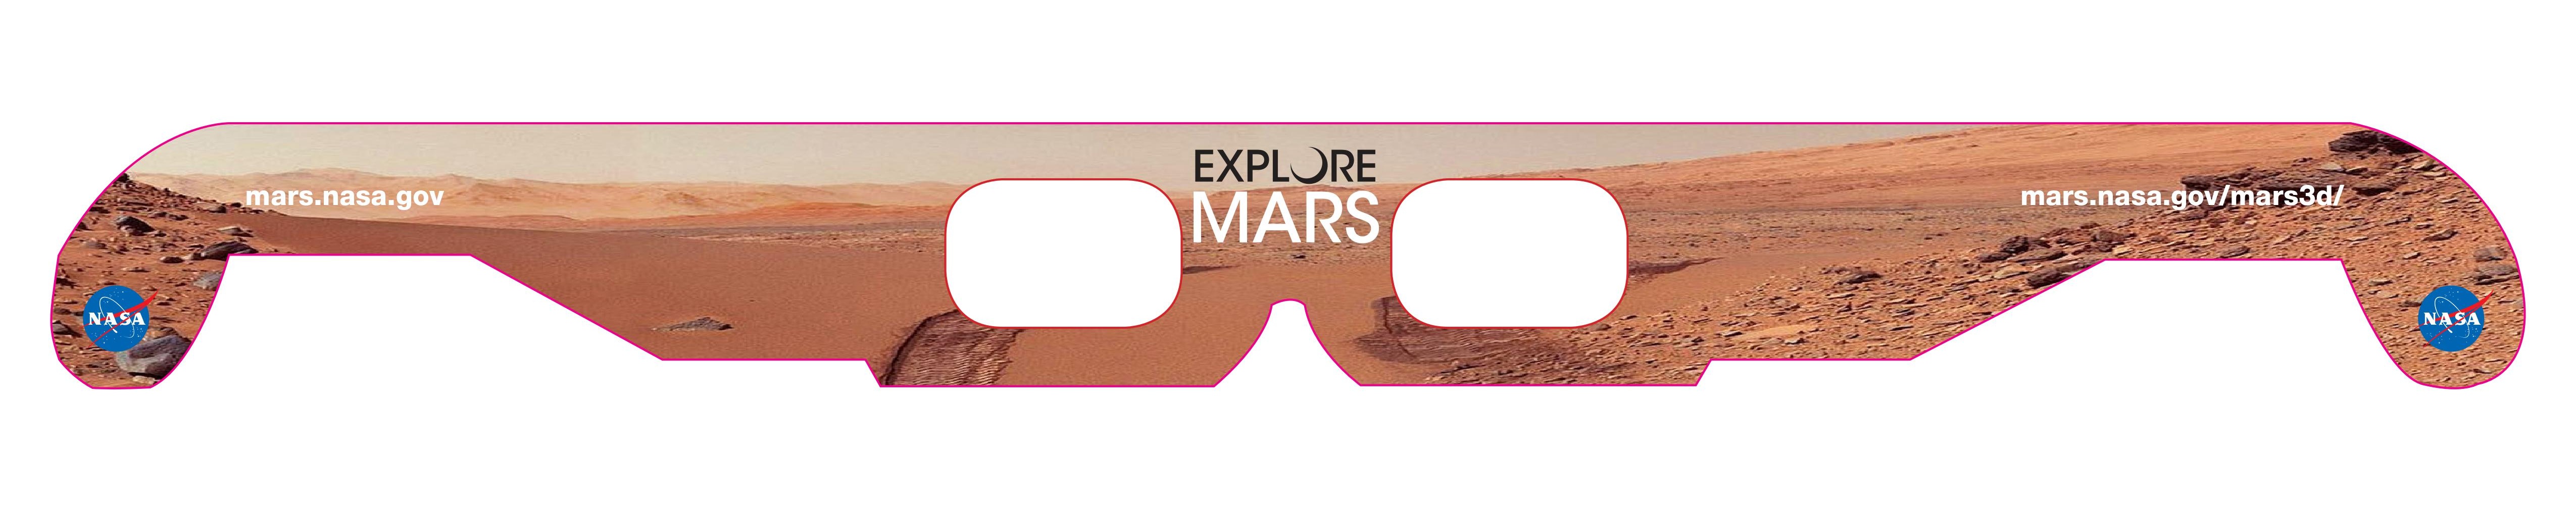 Mars 3D Glasses Template